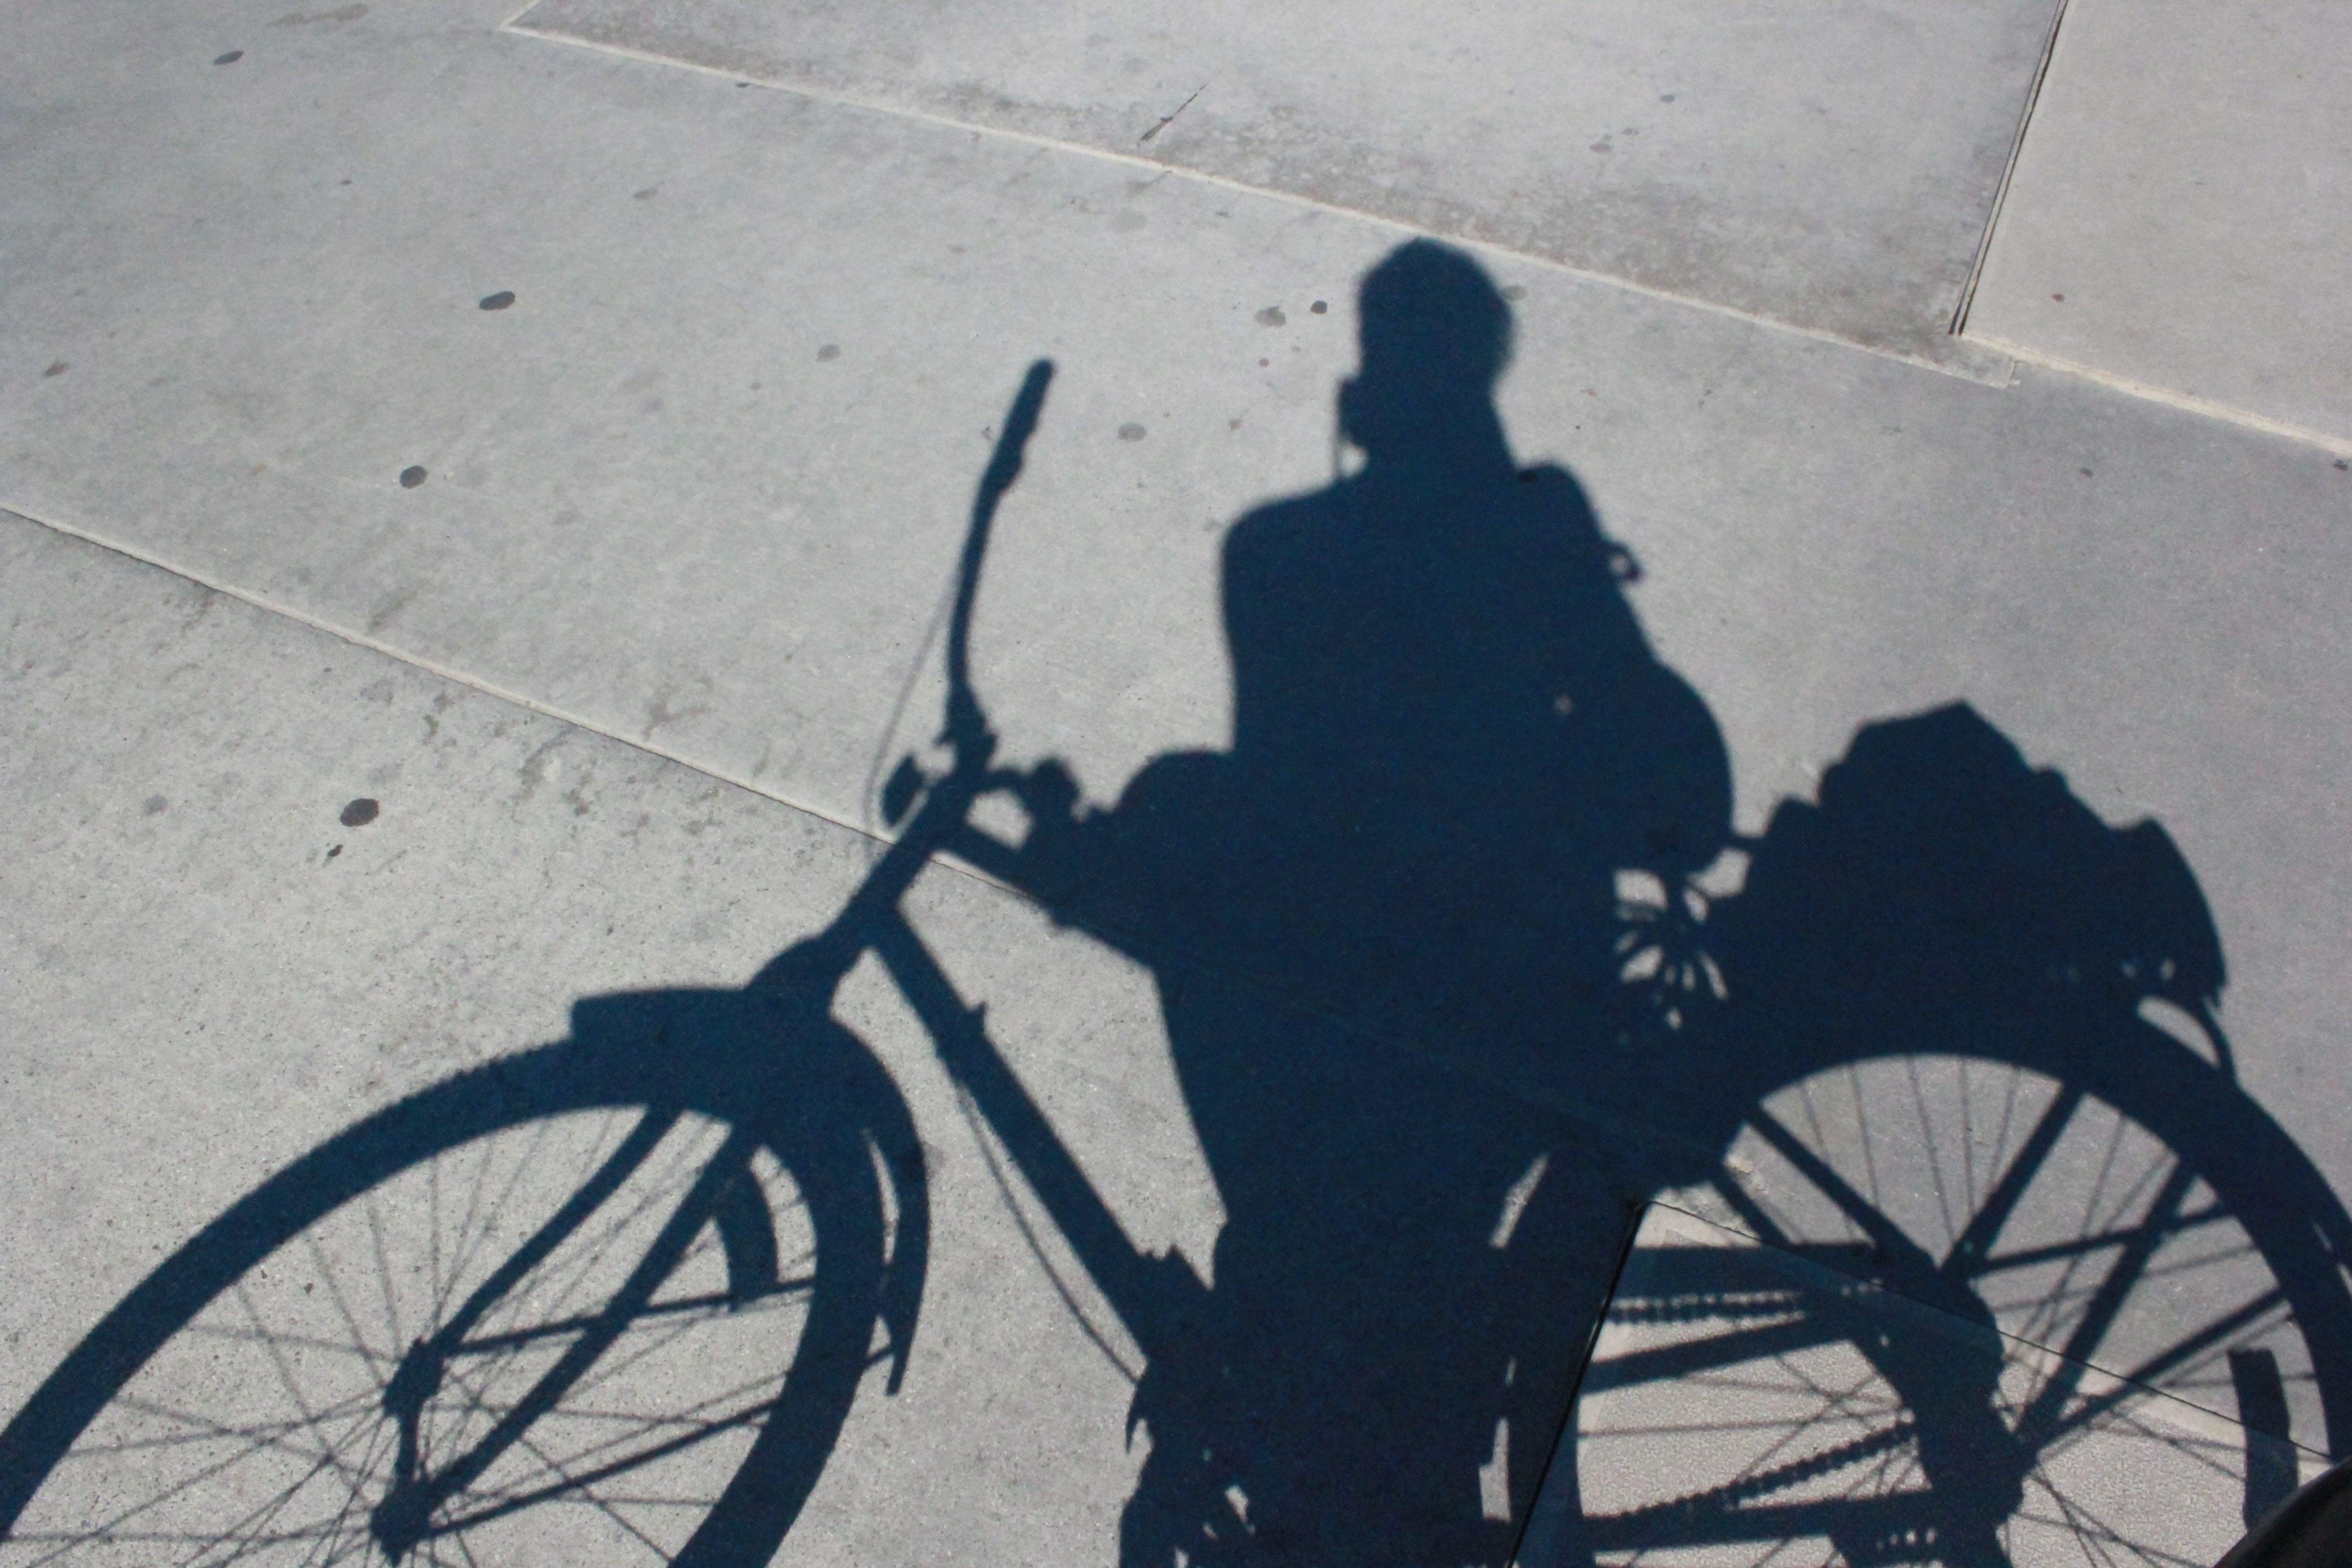 shadow of woman with cruiser bike